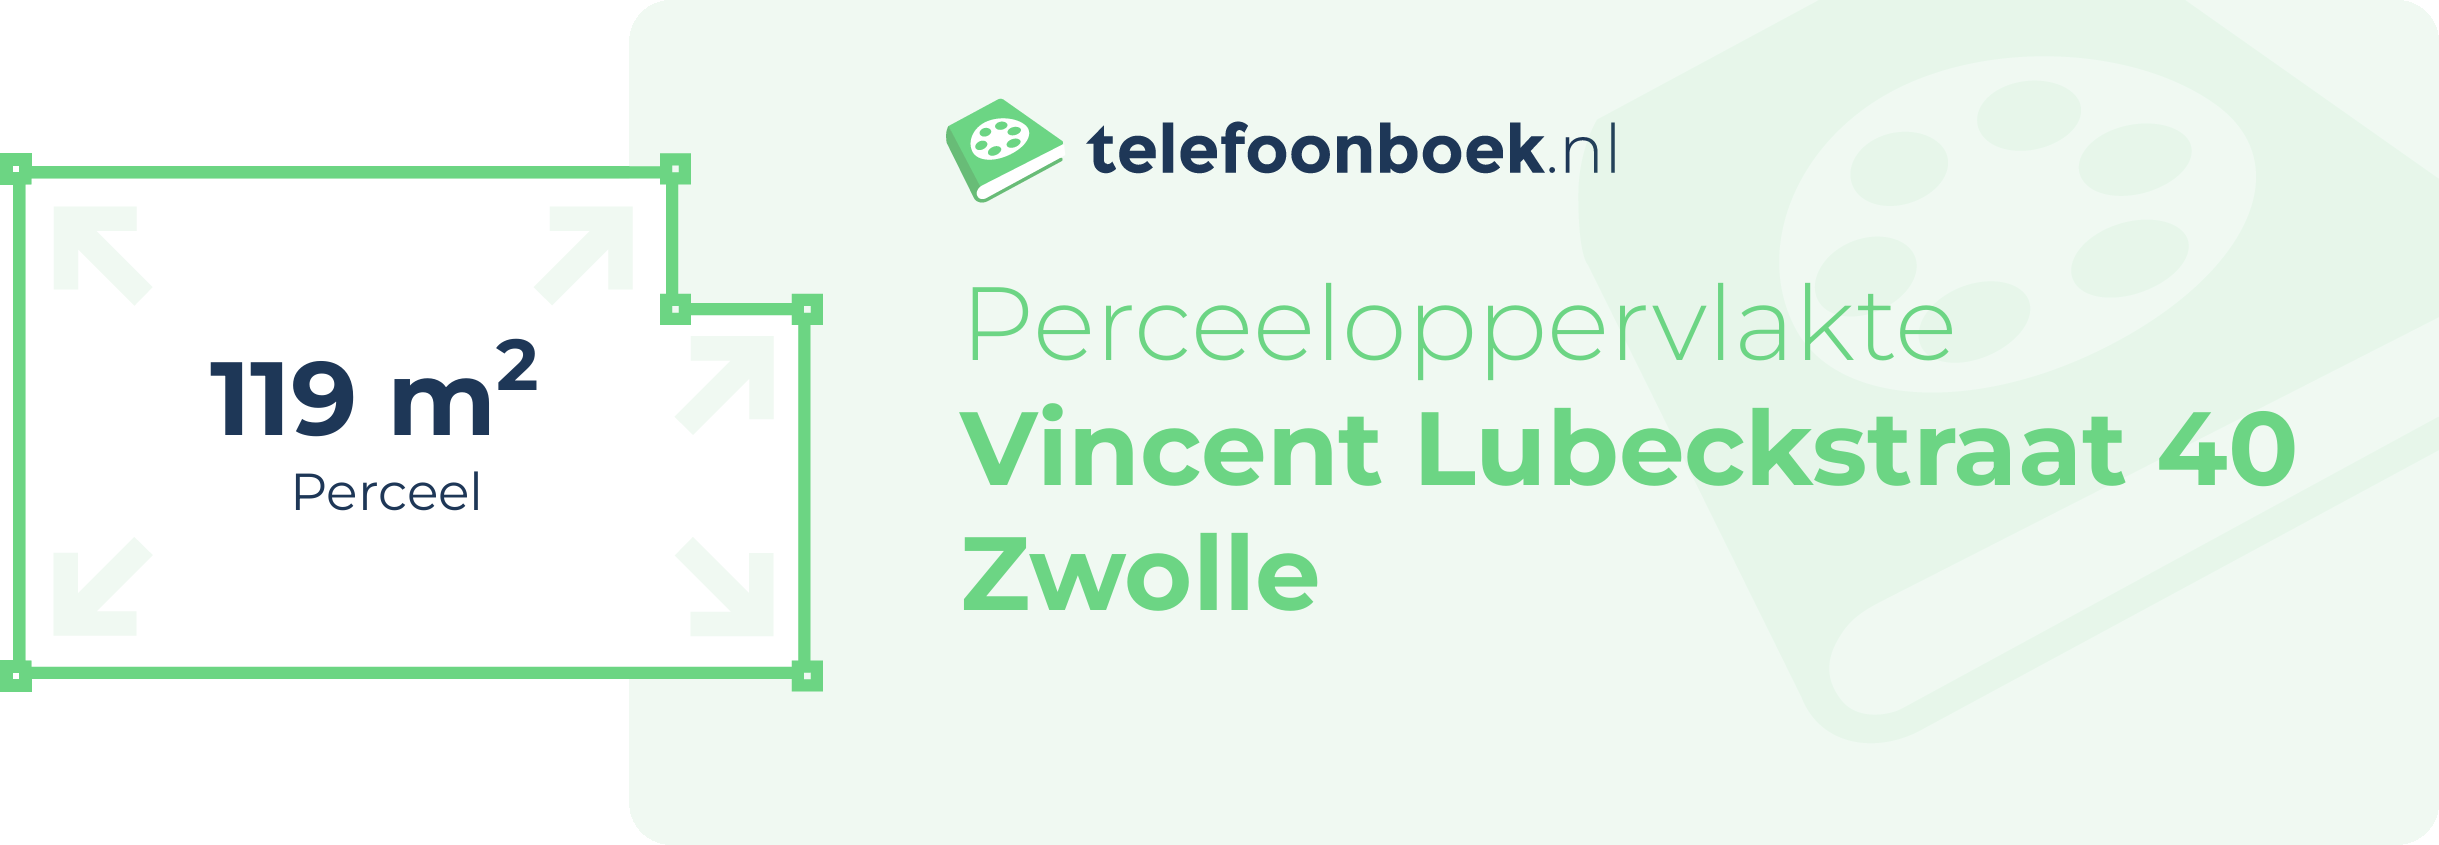 Perceeloppervlakte Vincent Lubeckstraat 40 Zwolle